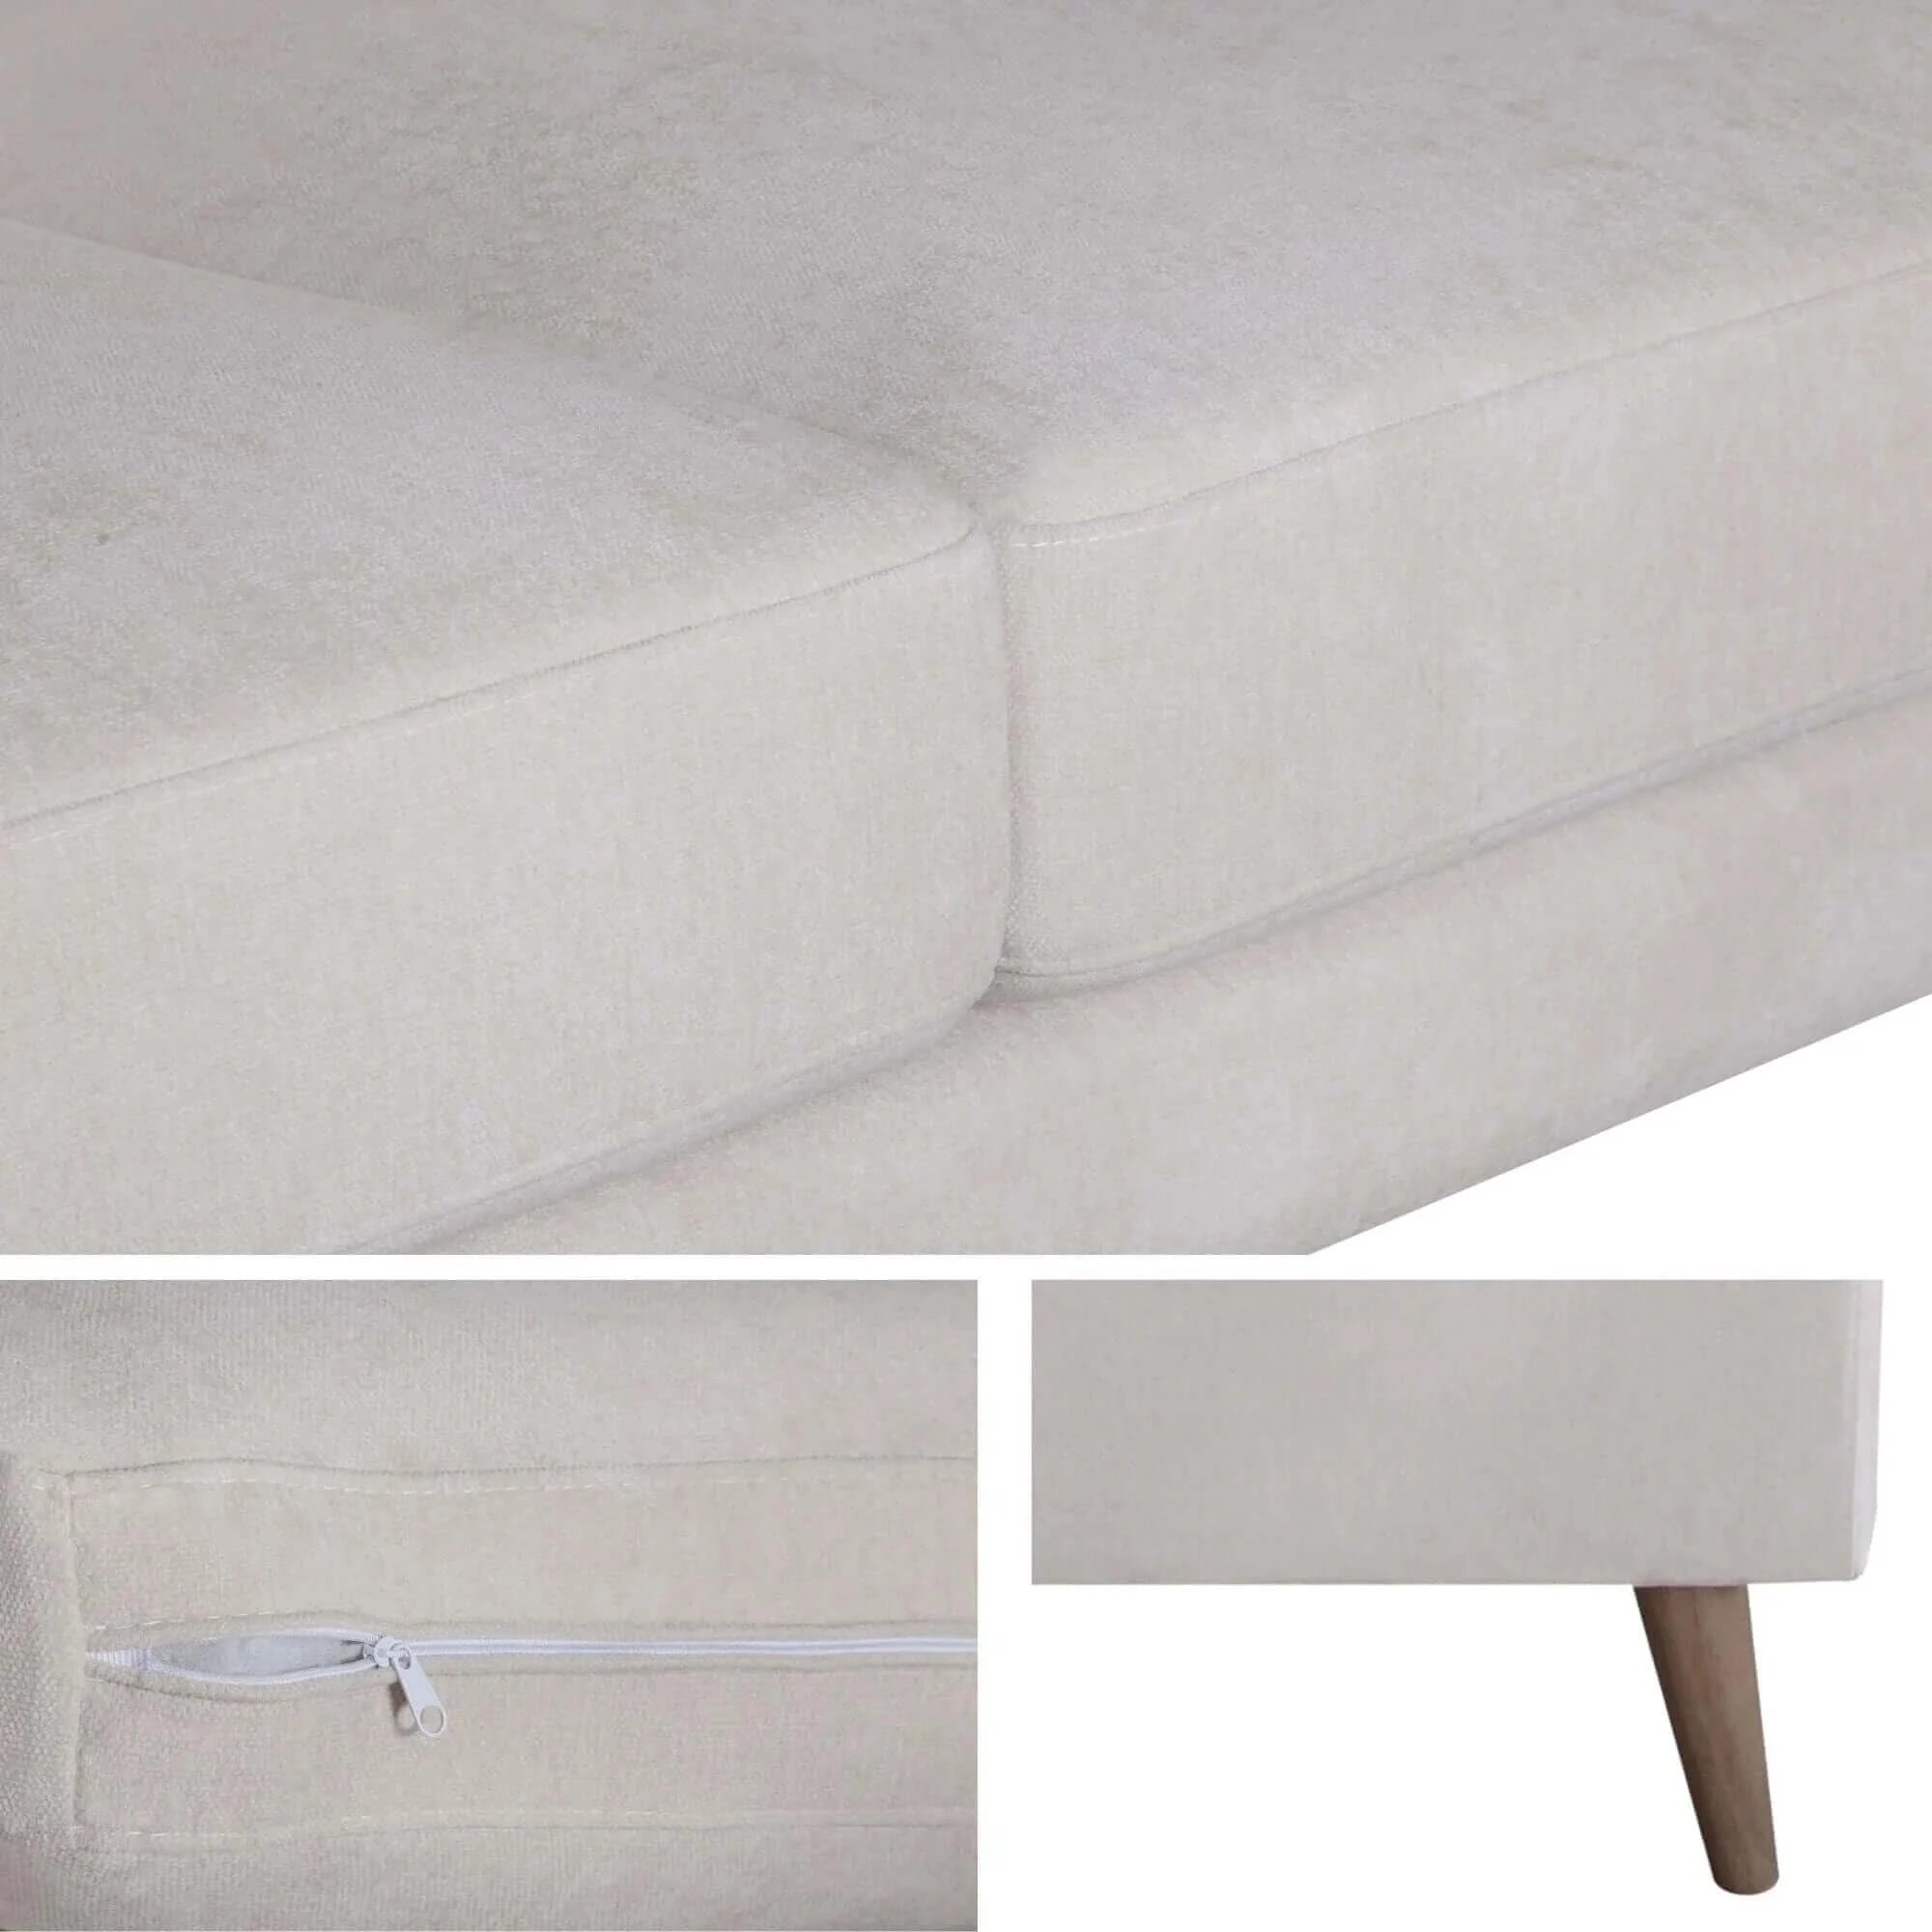 Buy nooa 2 + 3 seater sofa set fabric uplholstered lounge couch - stone - upinteriors-Upinteriors